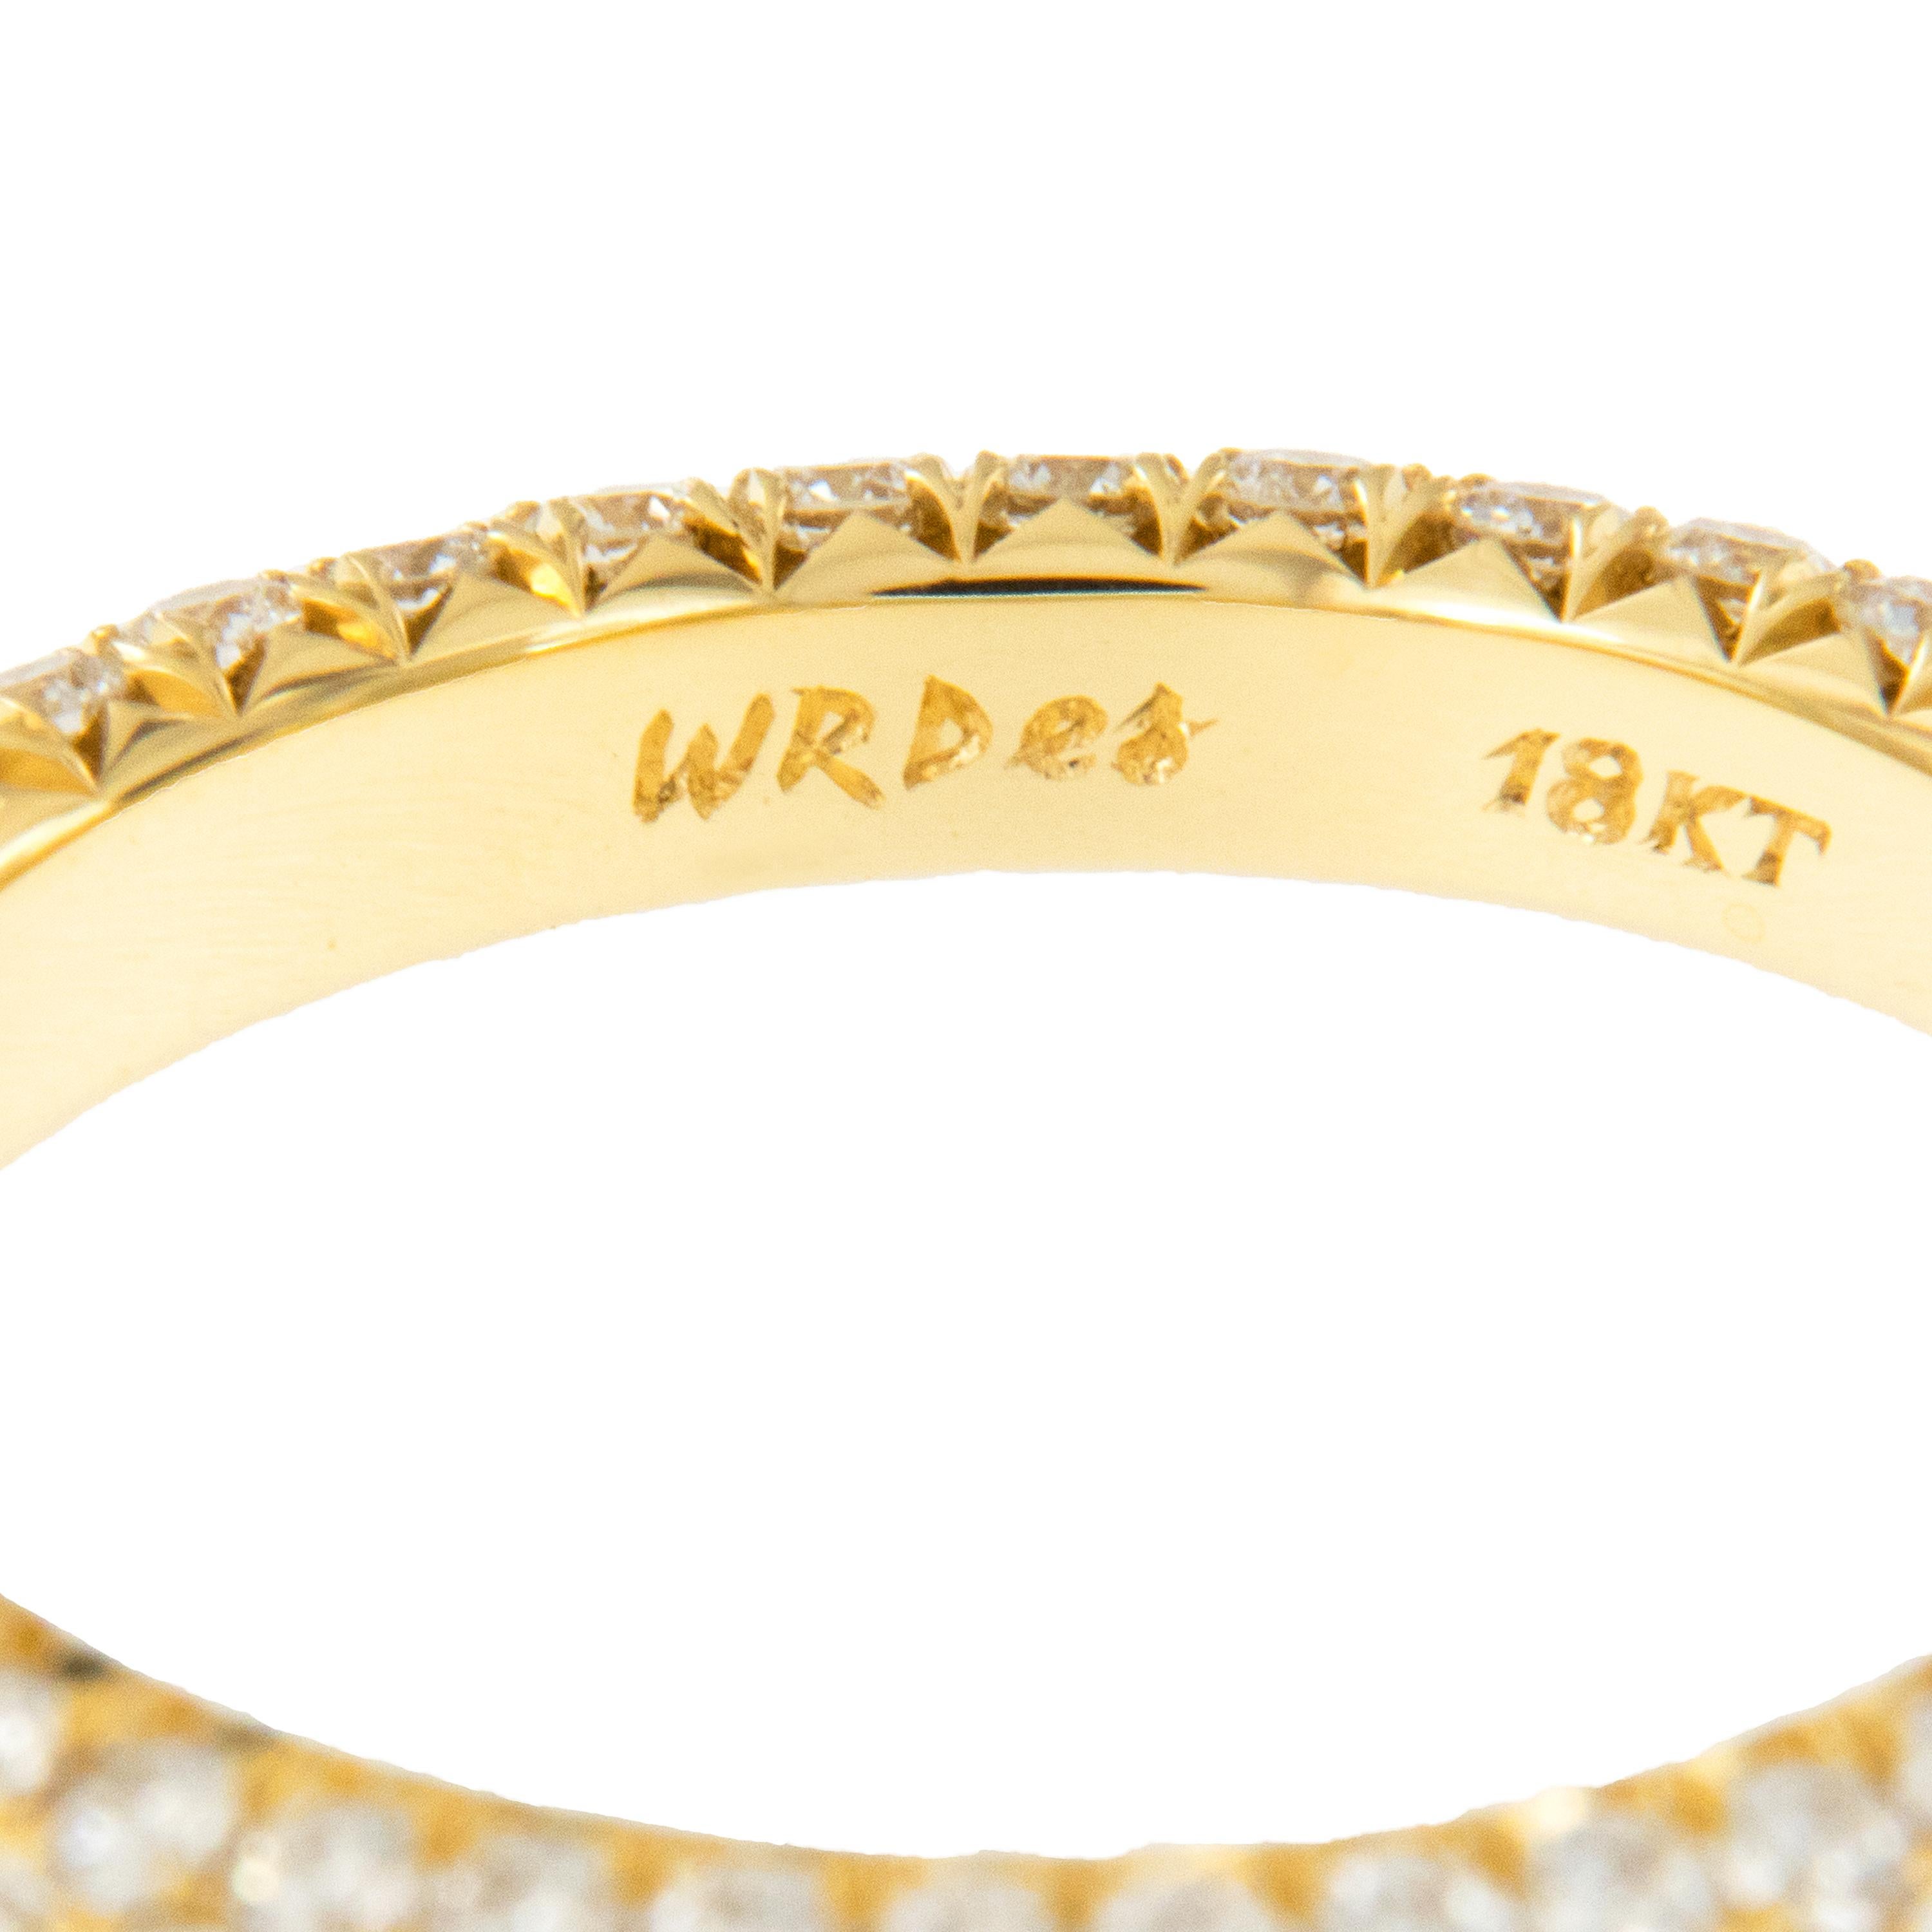 Contemporary William Rosenberg 18 Karat Yellow Gold 1.49 Carat Pave' Diamond Eternity Ring